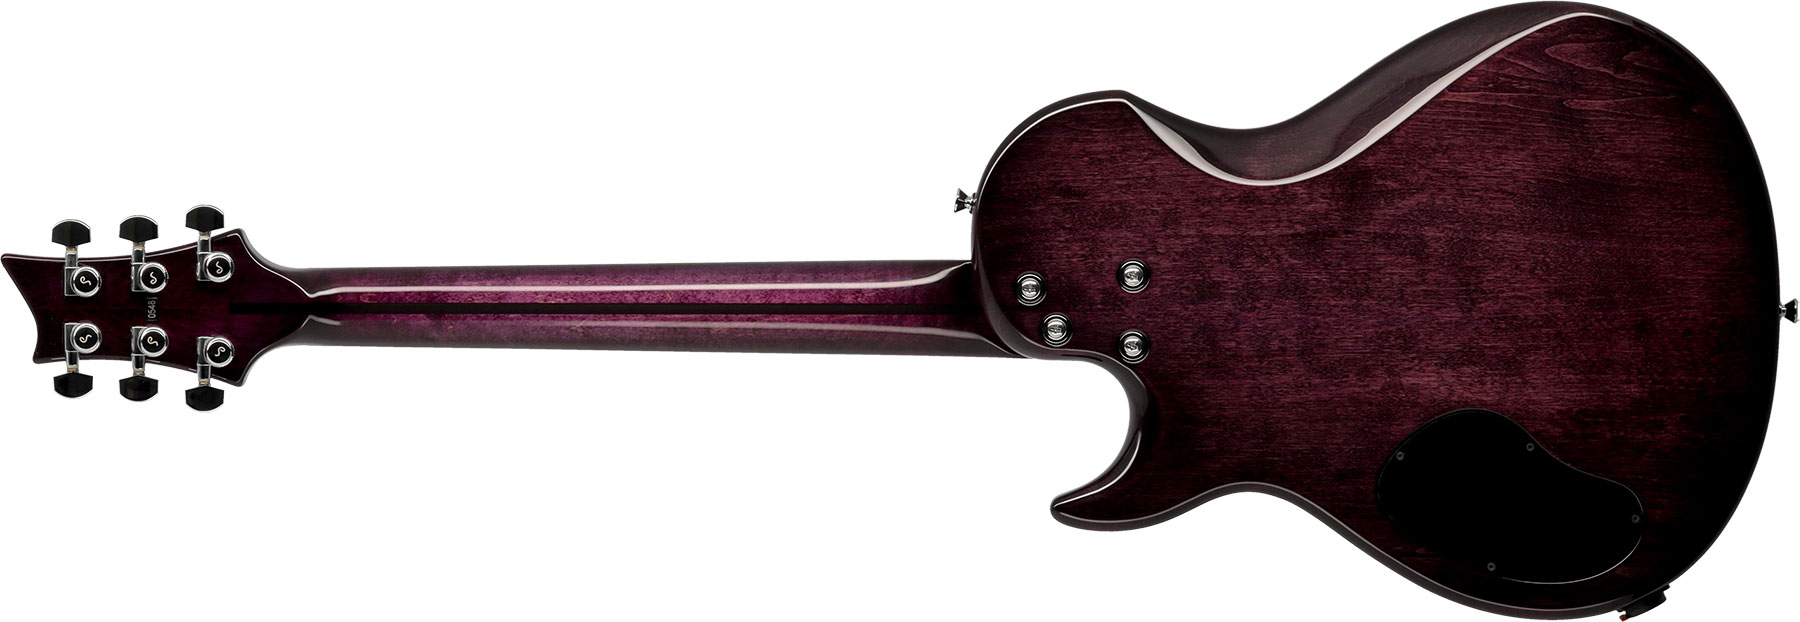 Vigier G.v. Wood 2h Ht Phe - Purple Fade - Single cut electric guitar - Variation 1